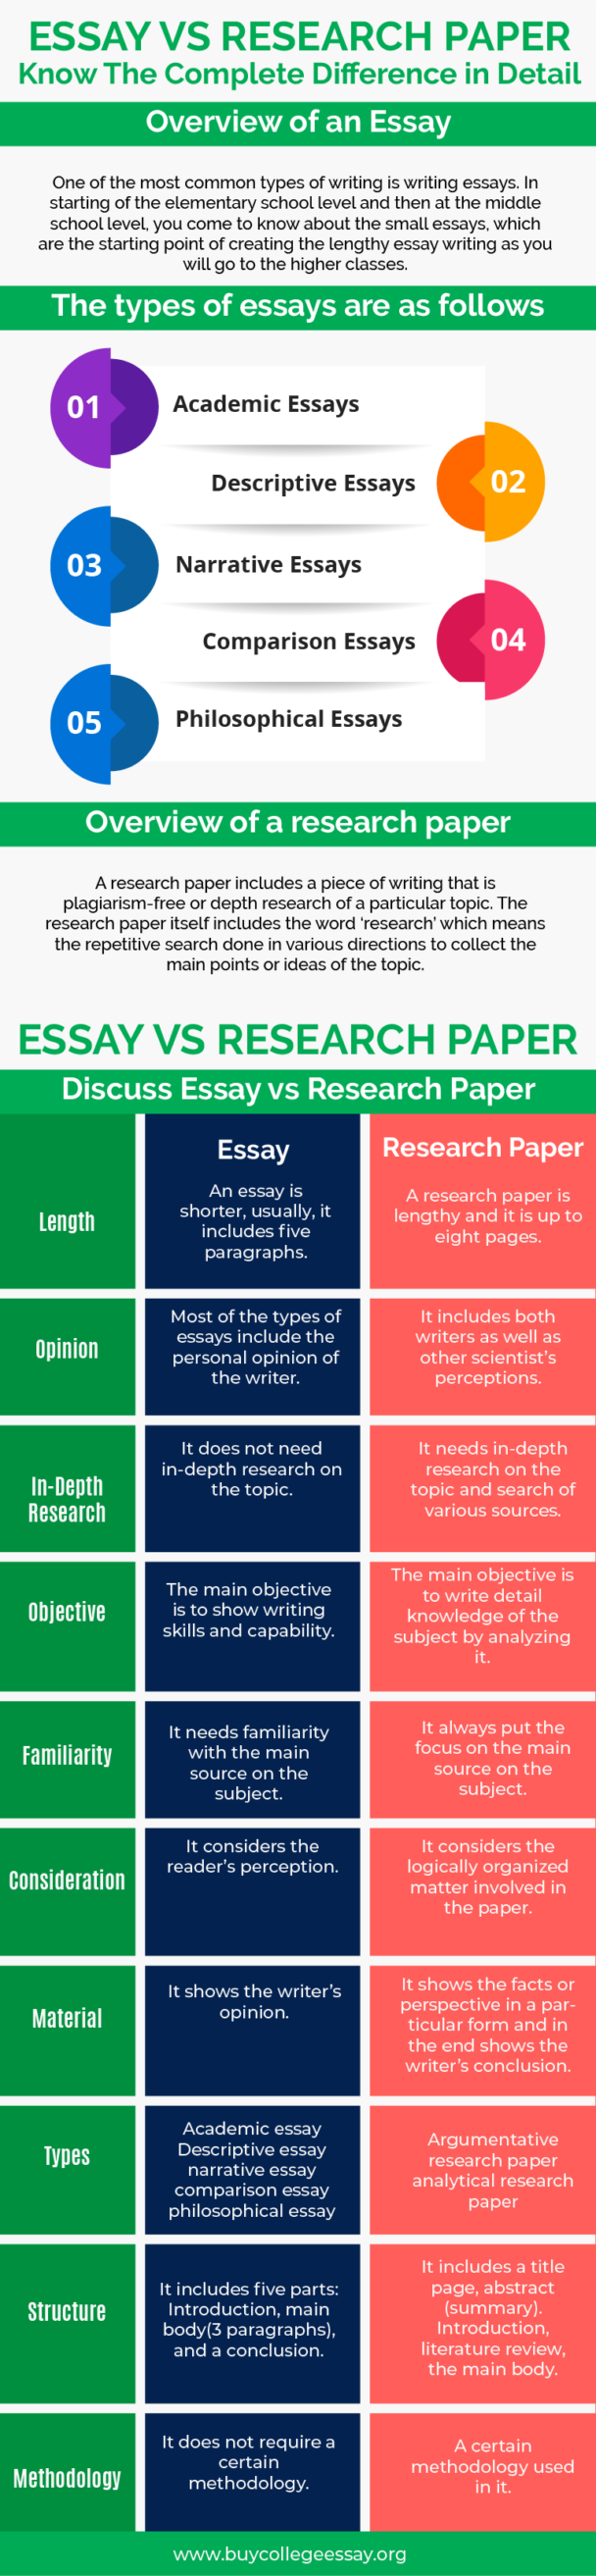 informative essay vs research paper